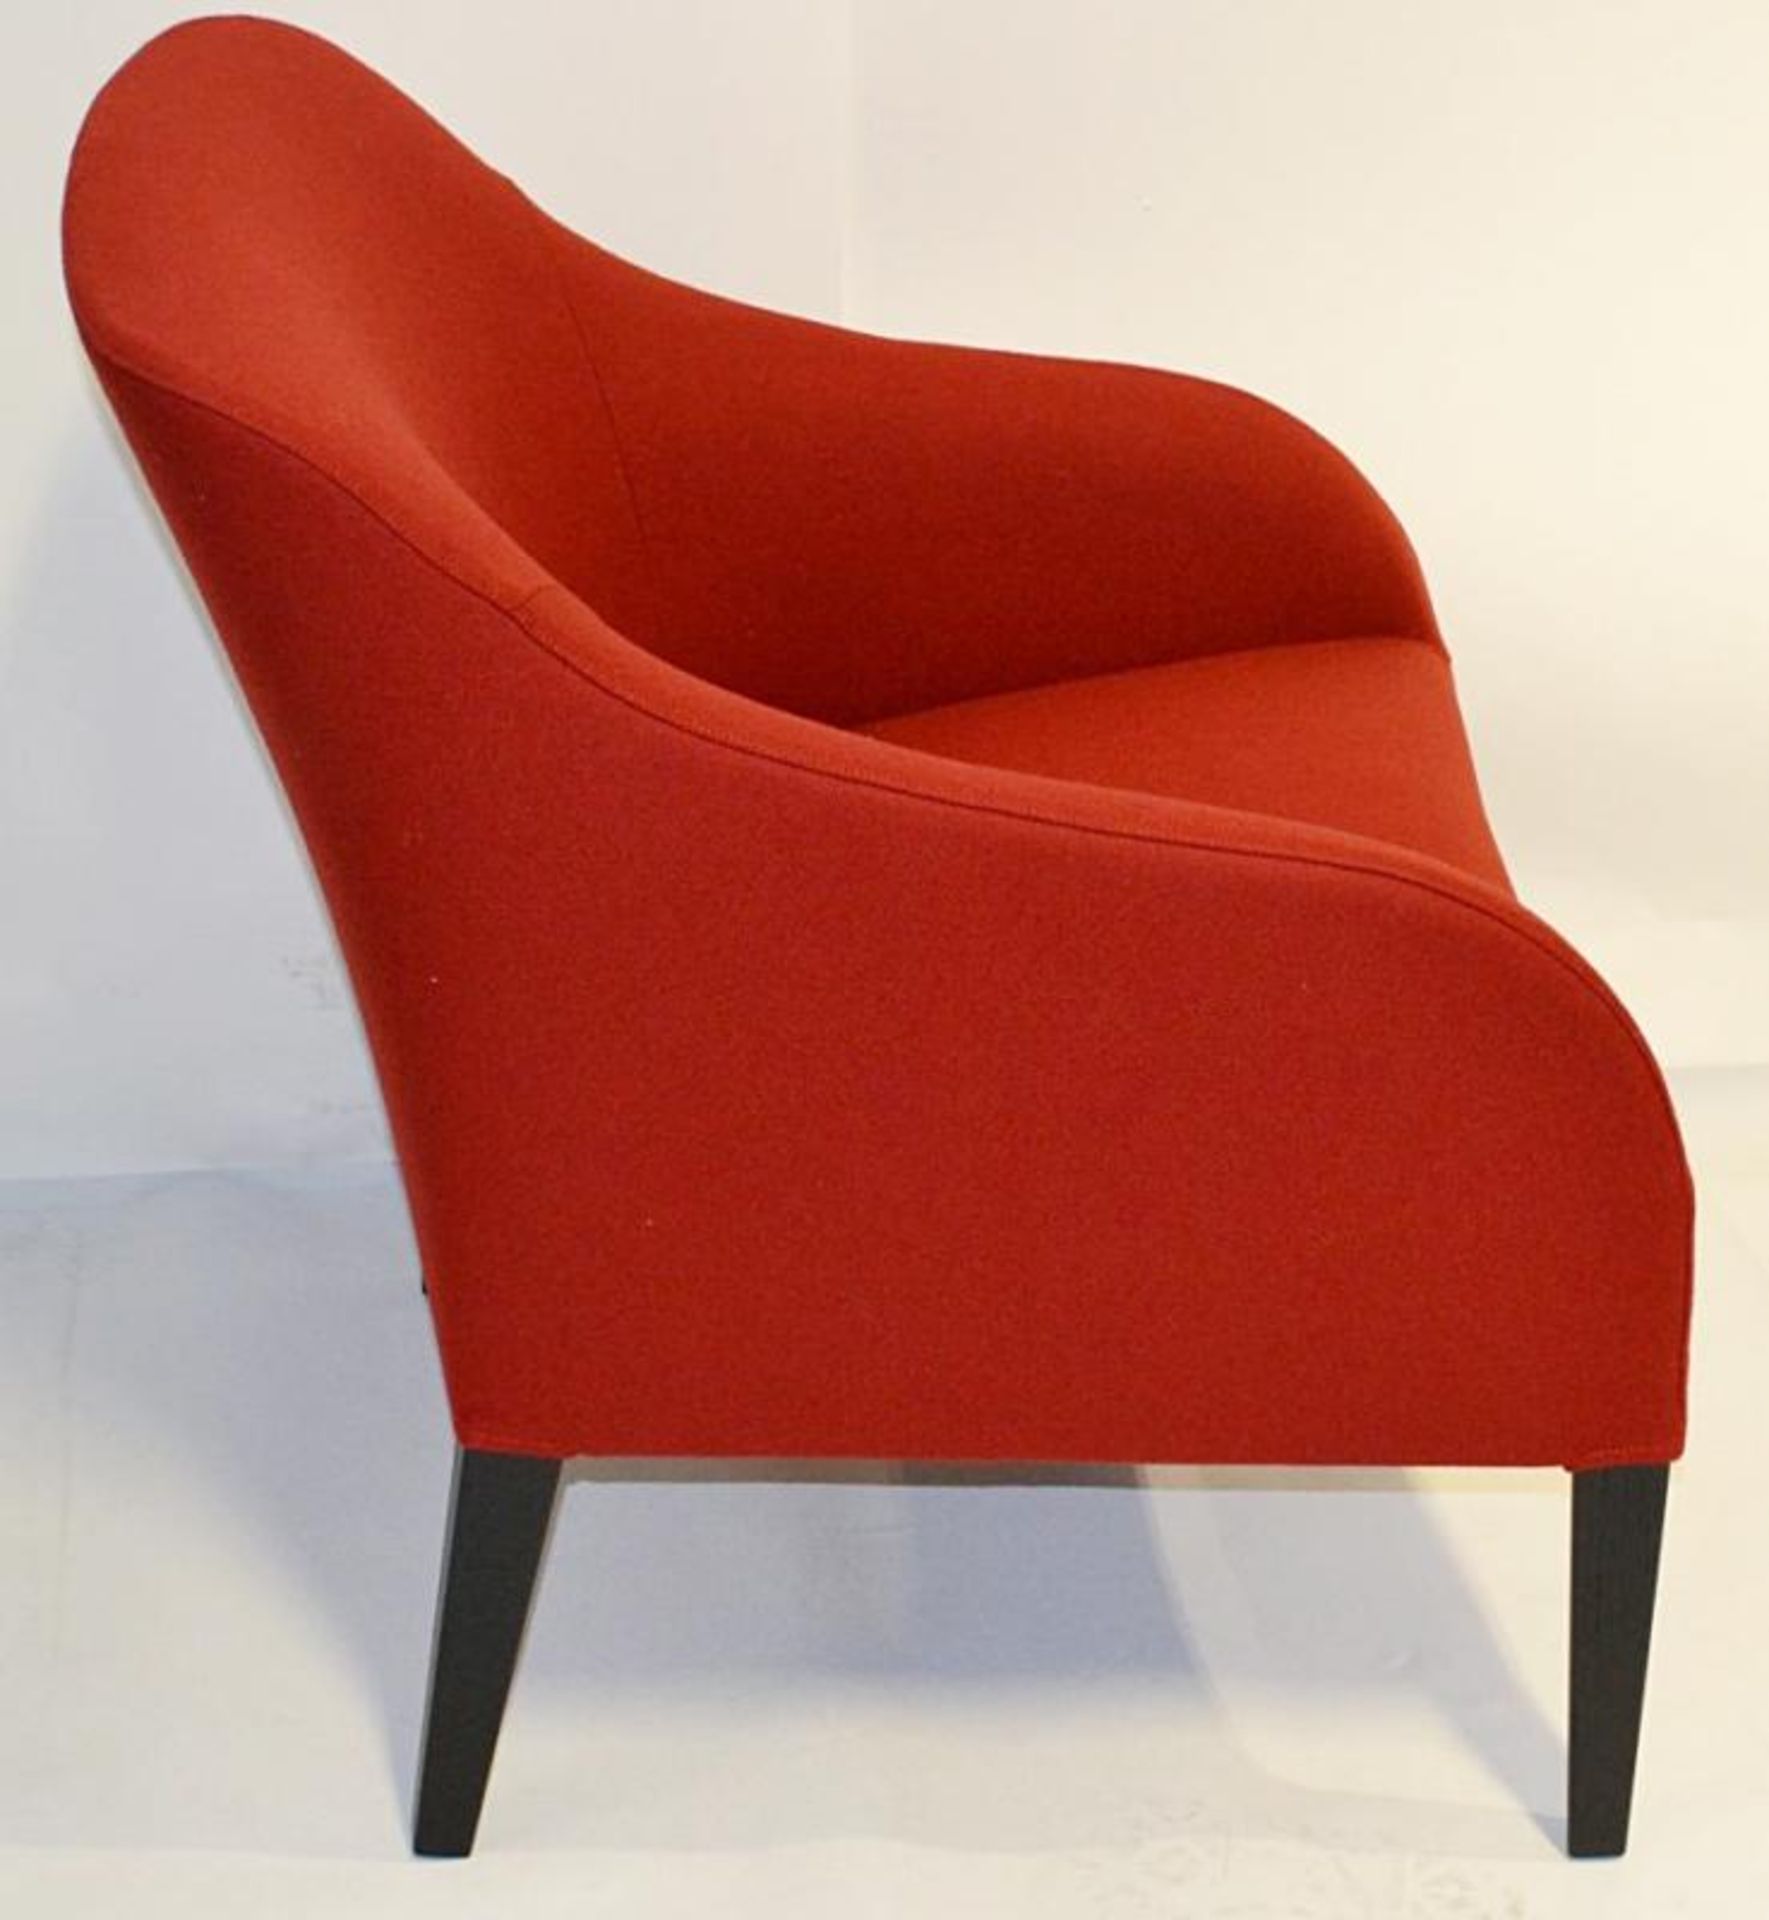 1 x B&B ITALIA Maxalto "Agathos" Armchair In Bright Red With Black Legs - Designed By Antonio Citter - Image 3 of 7